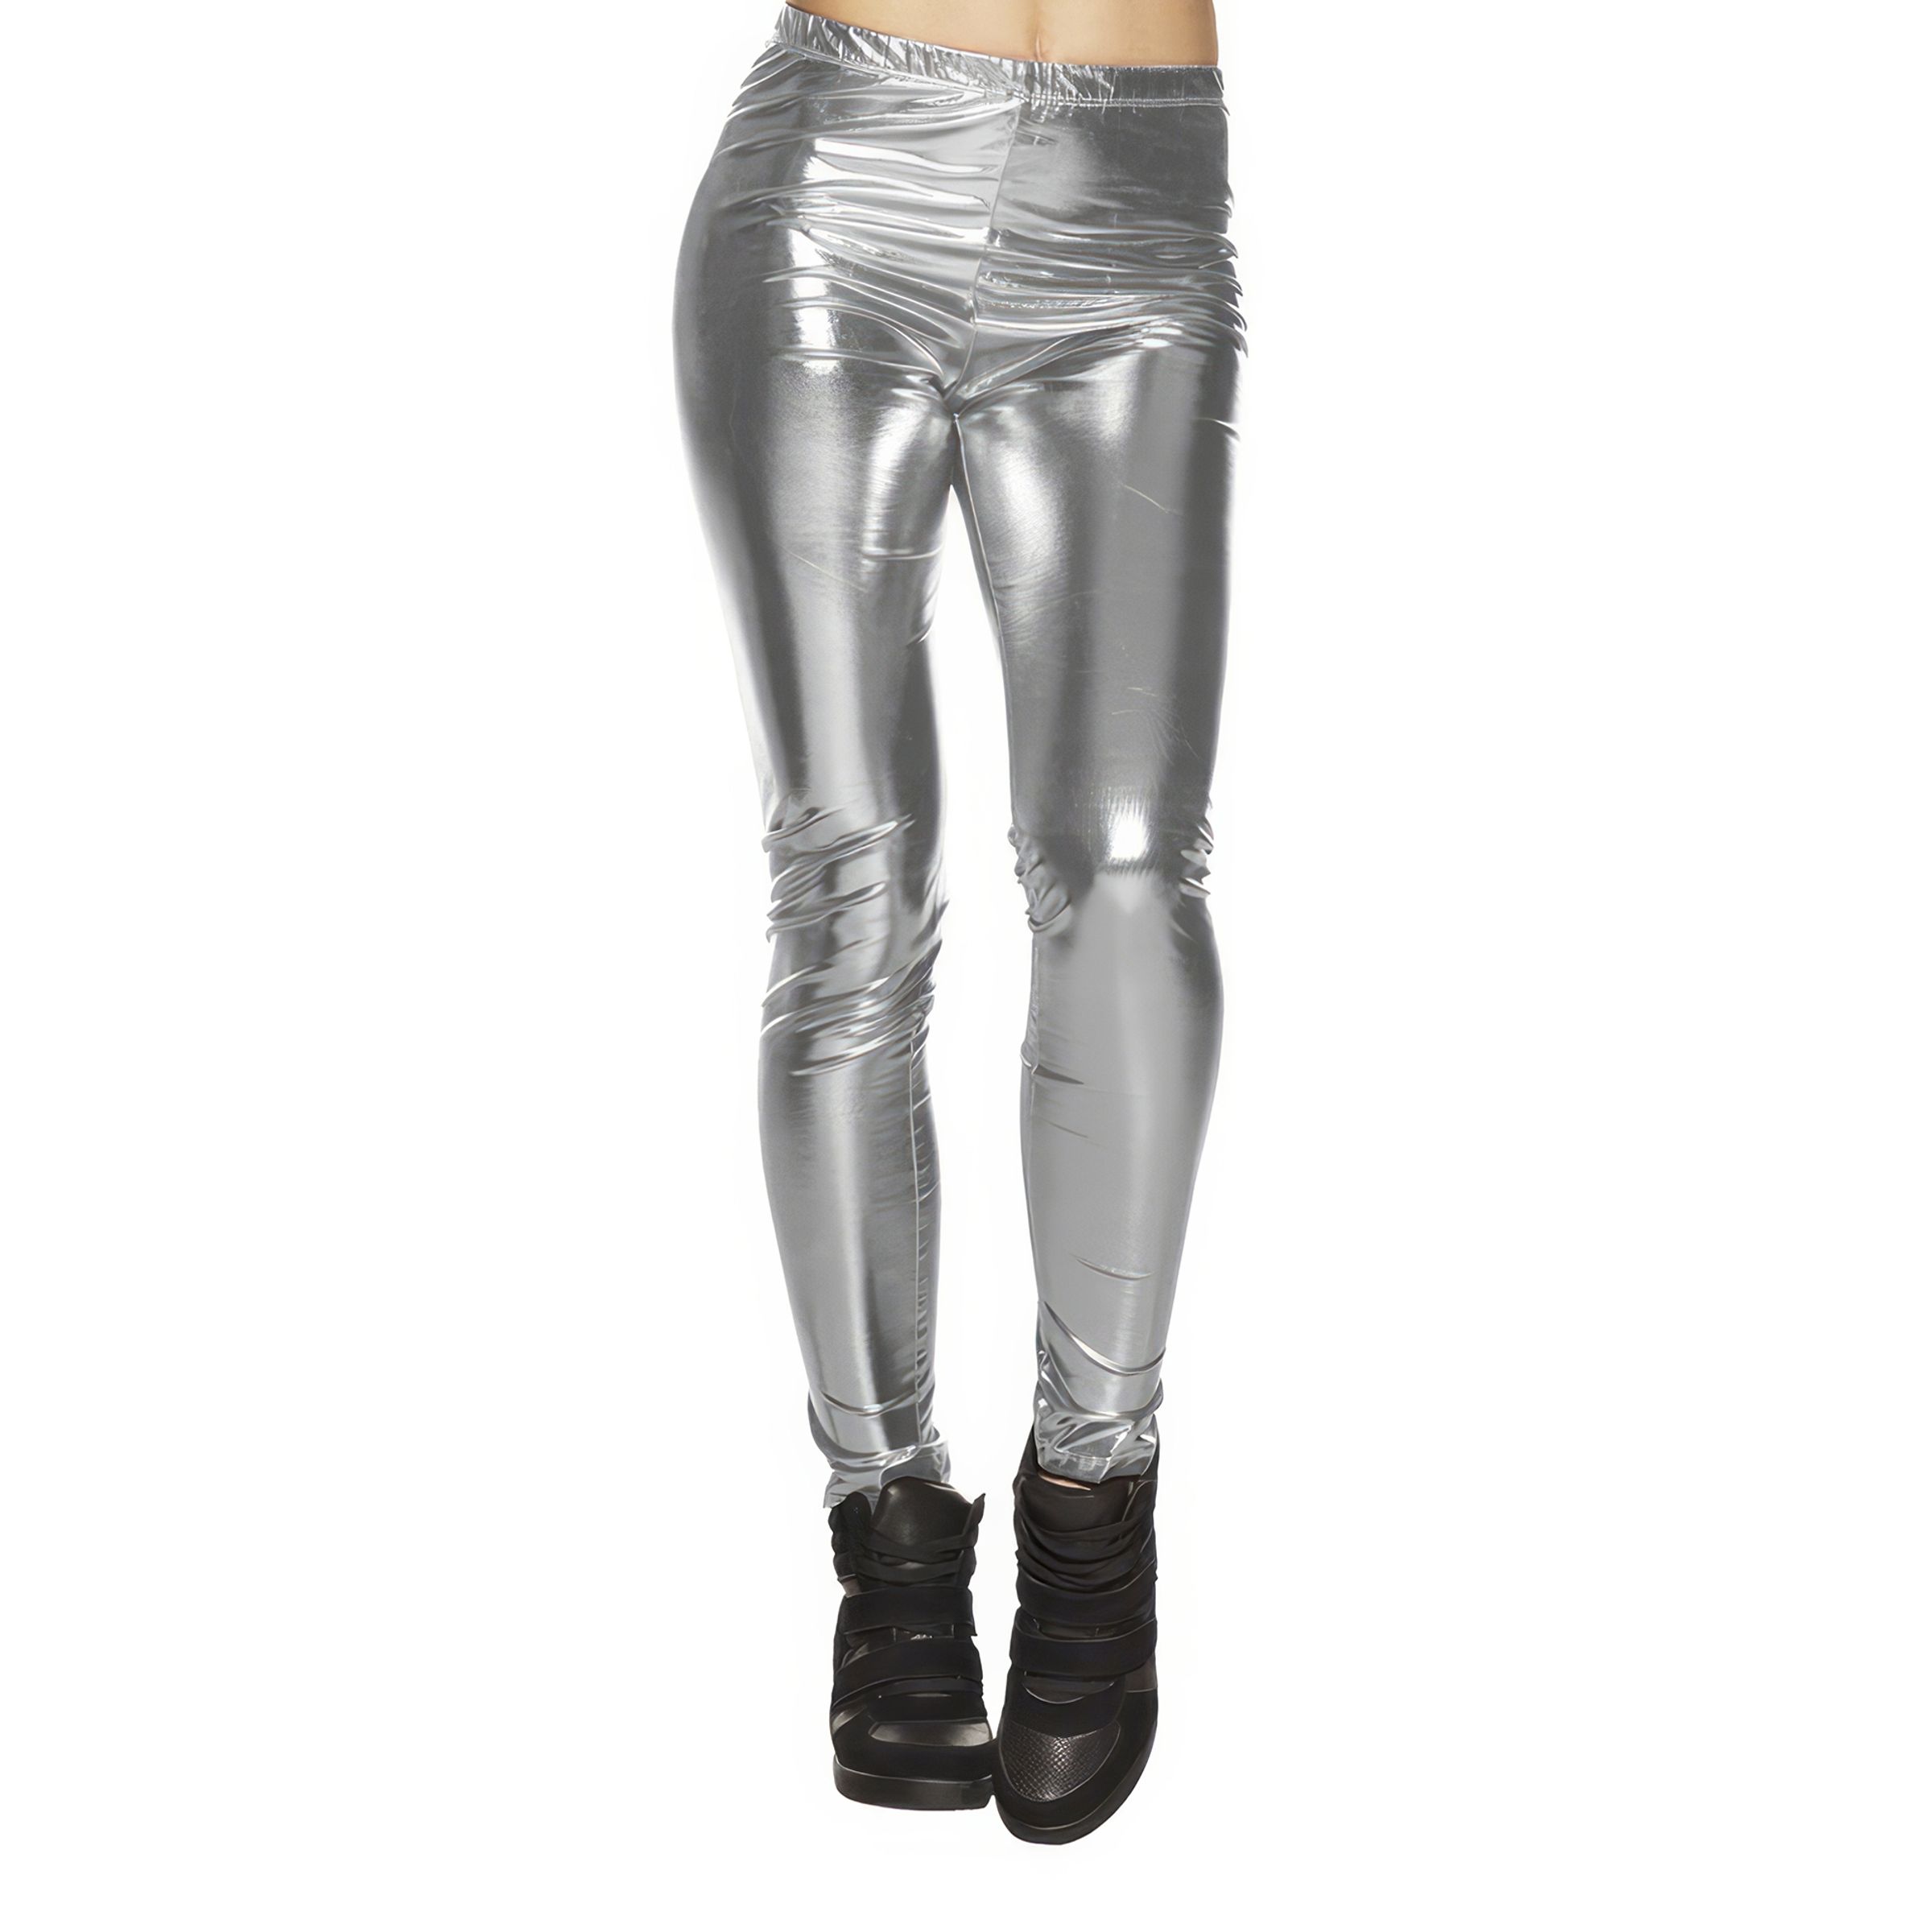 Leggings Metallic Silver - Medium